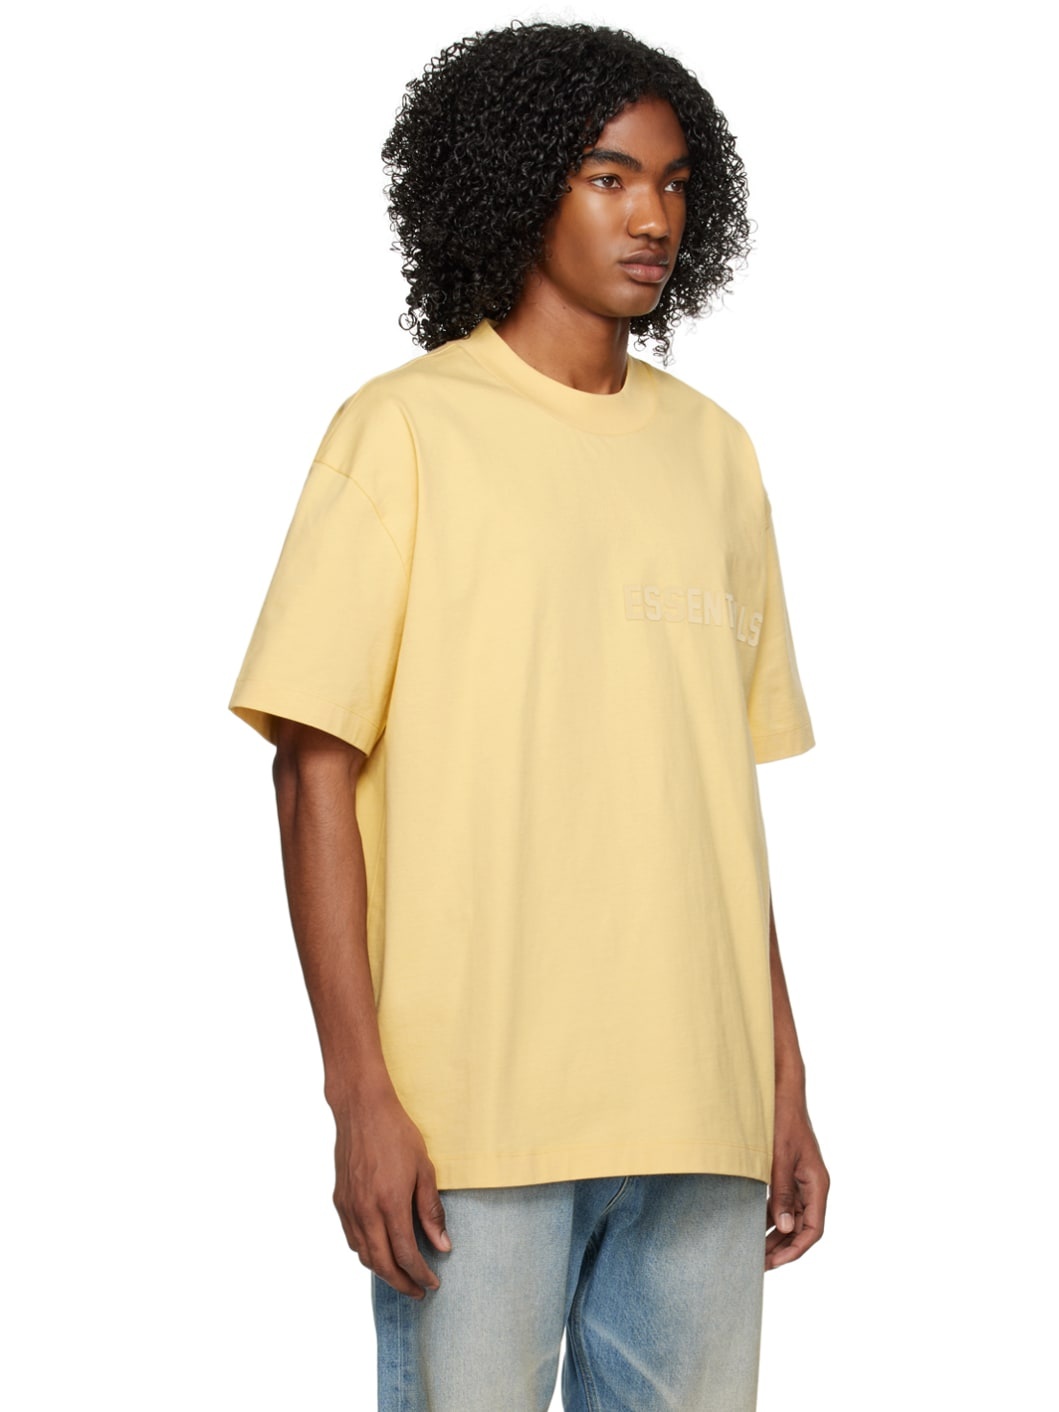 SSENSE Exclusive Yellow T-Shirt - 2